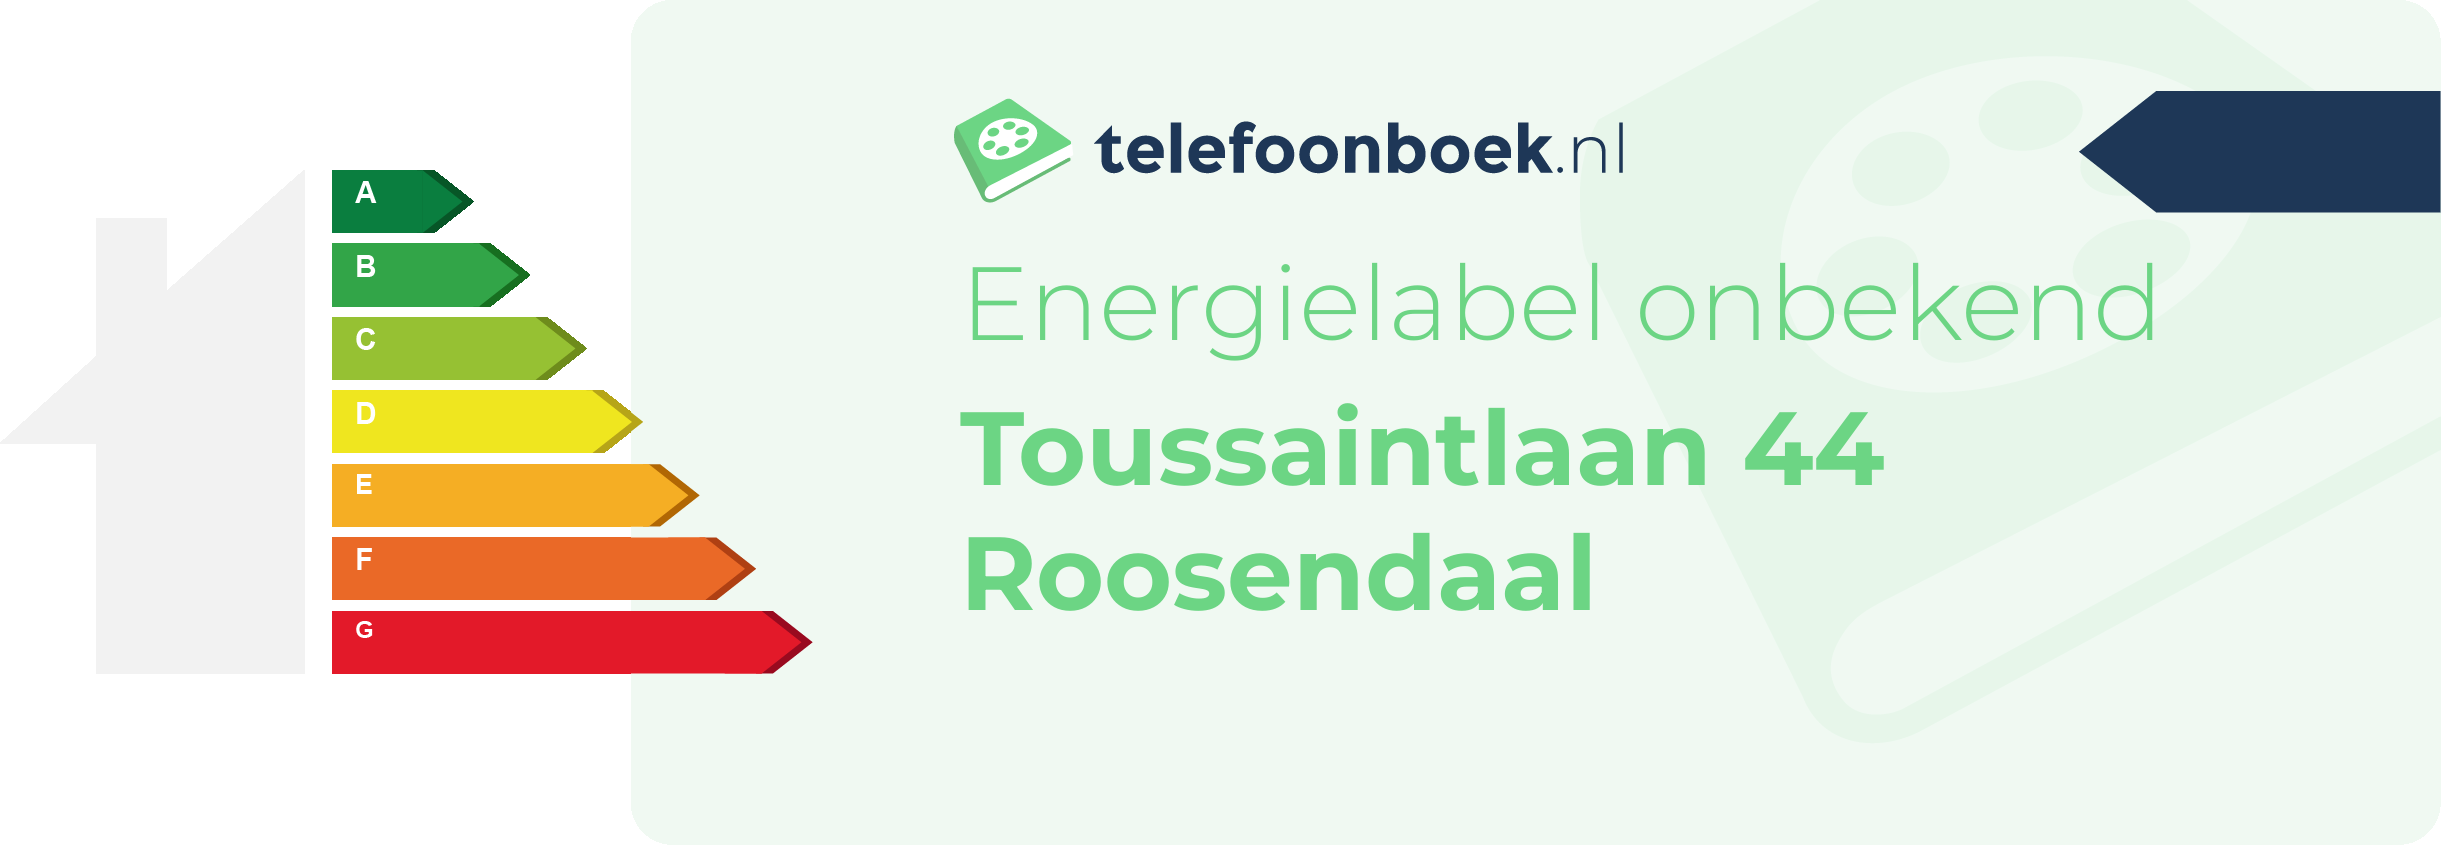 Energielabel Toussaintlaan 44 Roosendaal